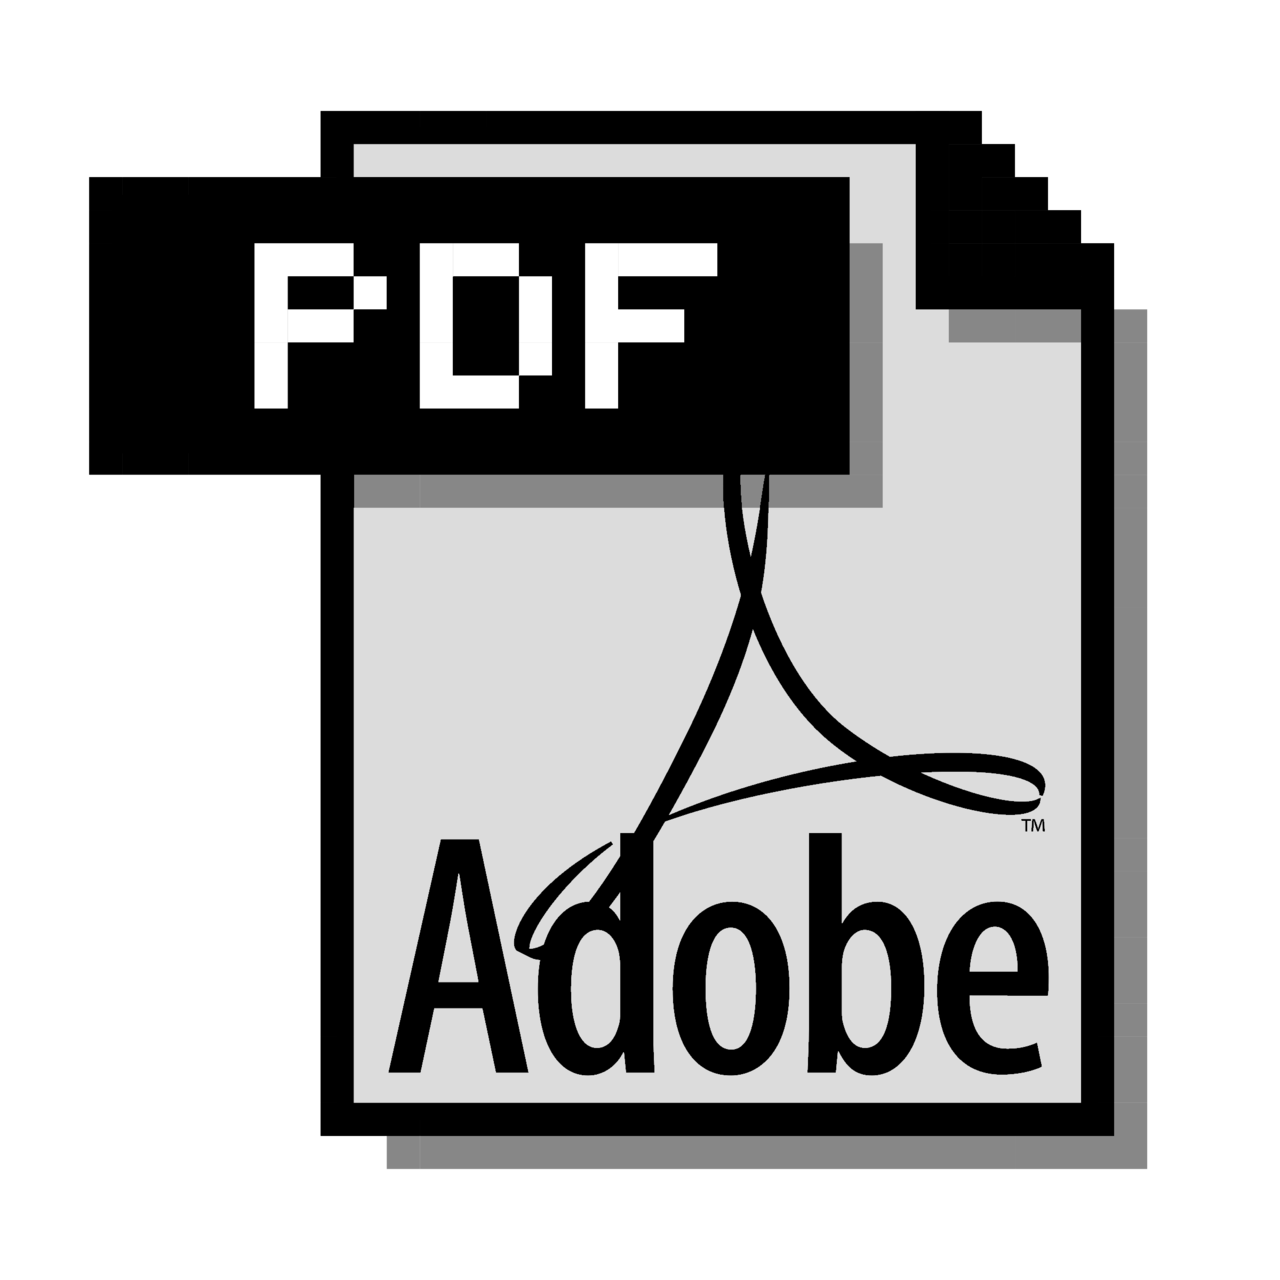 adobe-pdf-logo-black-and-white-1